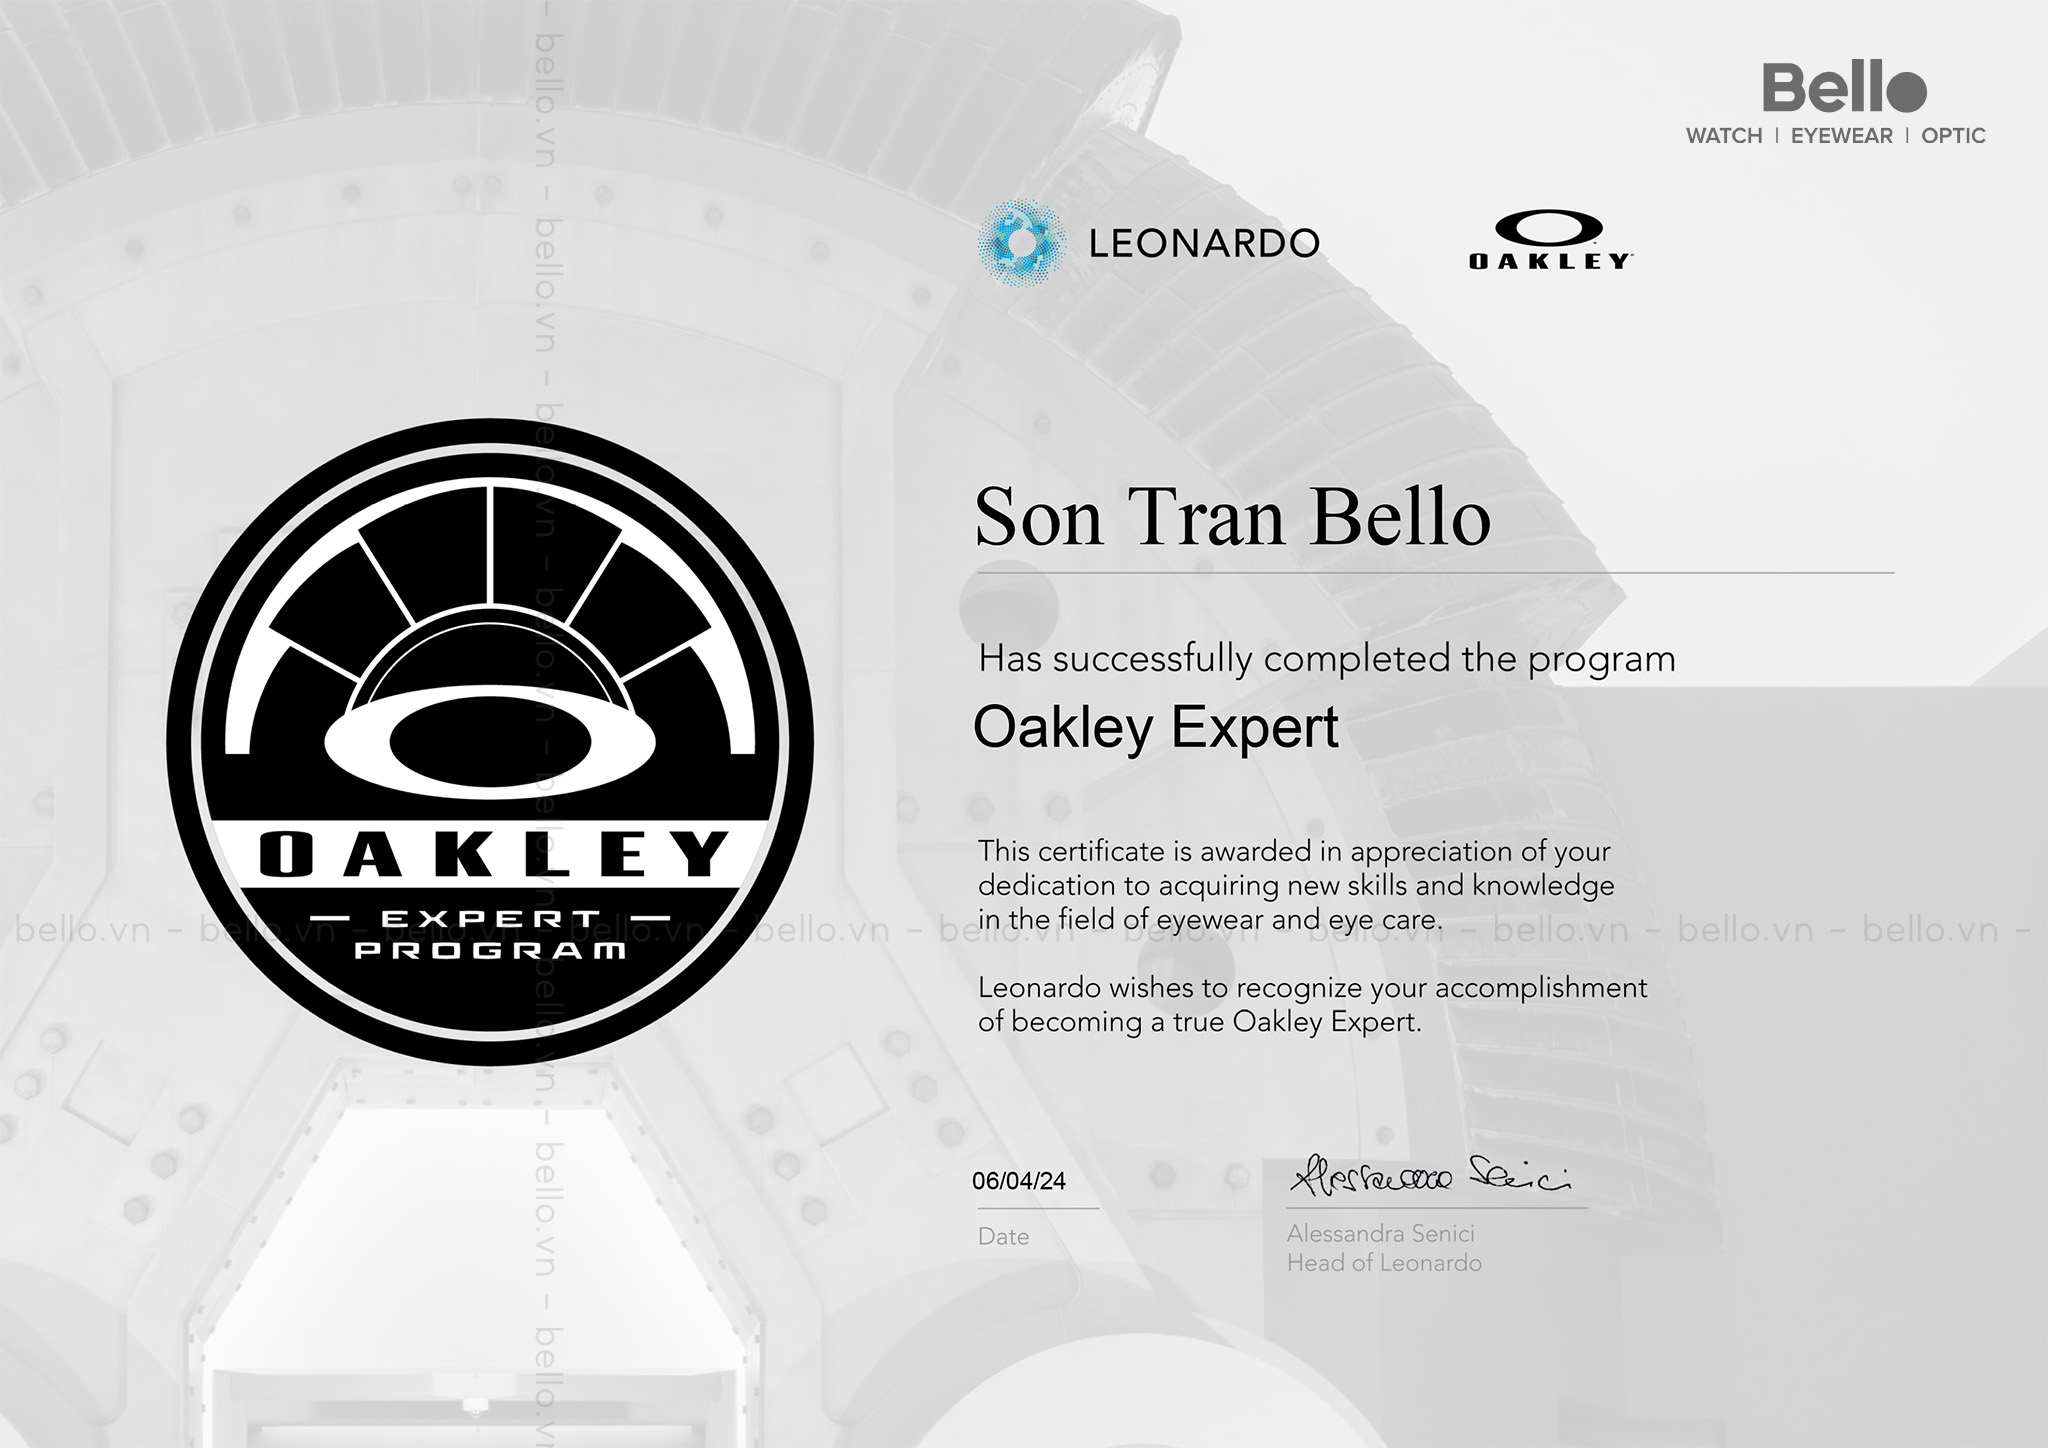 Chứng nhận Chuyên gia Oakley - Oakley Expert từ EssilorLuxottica